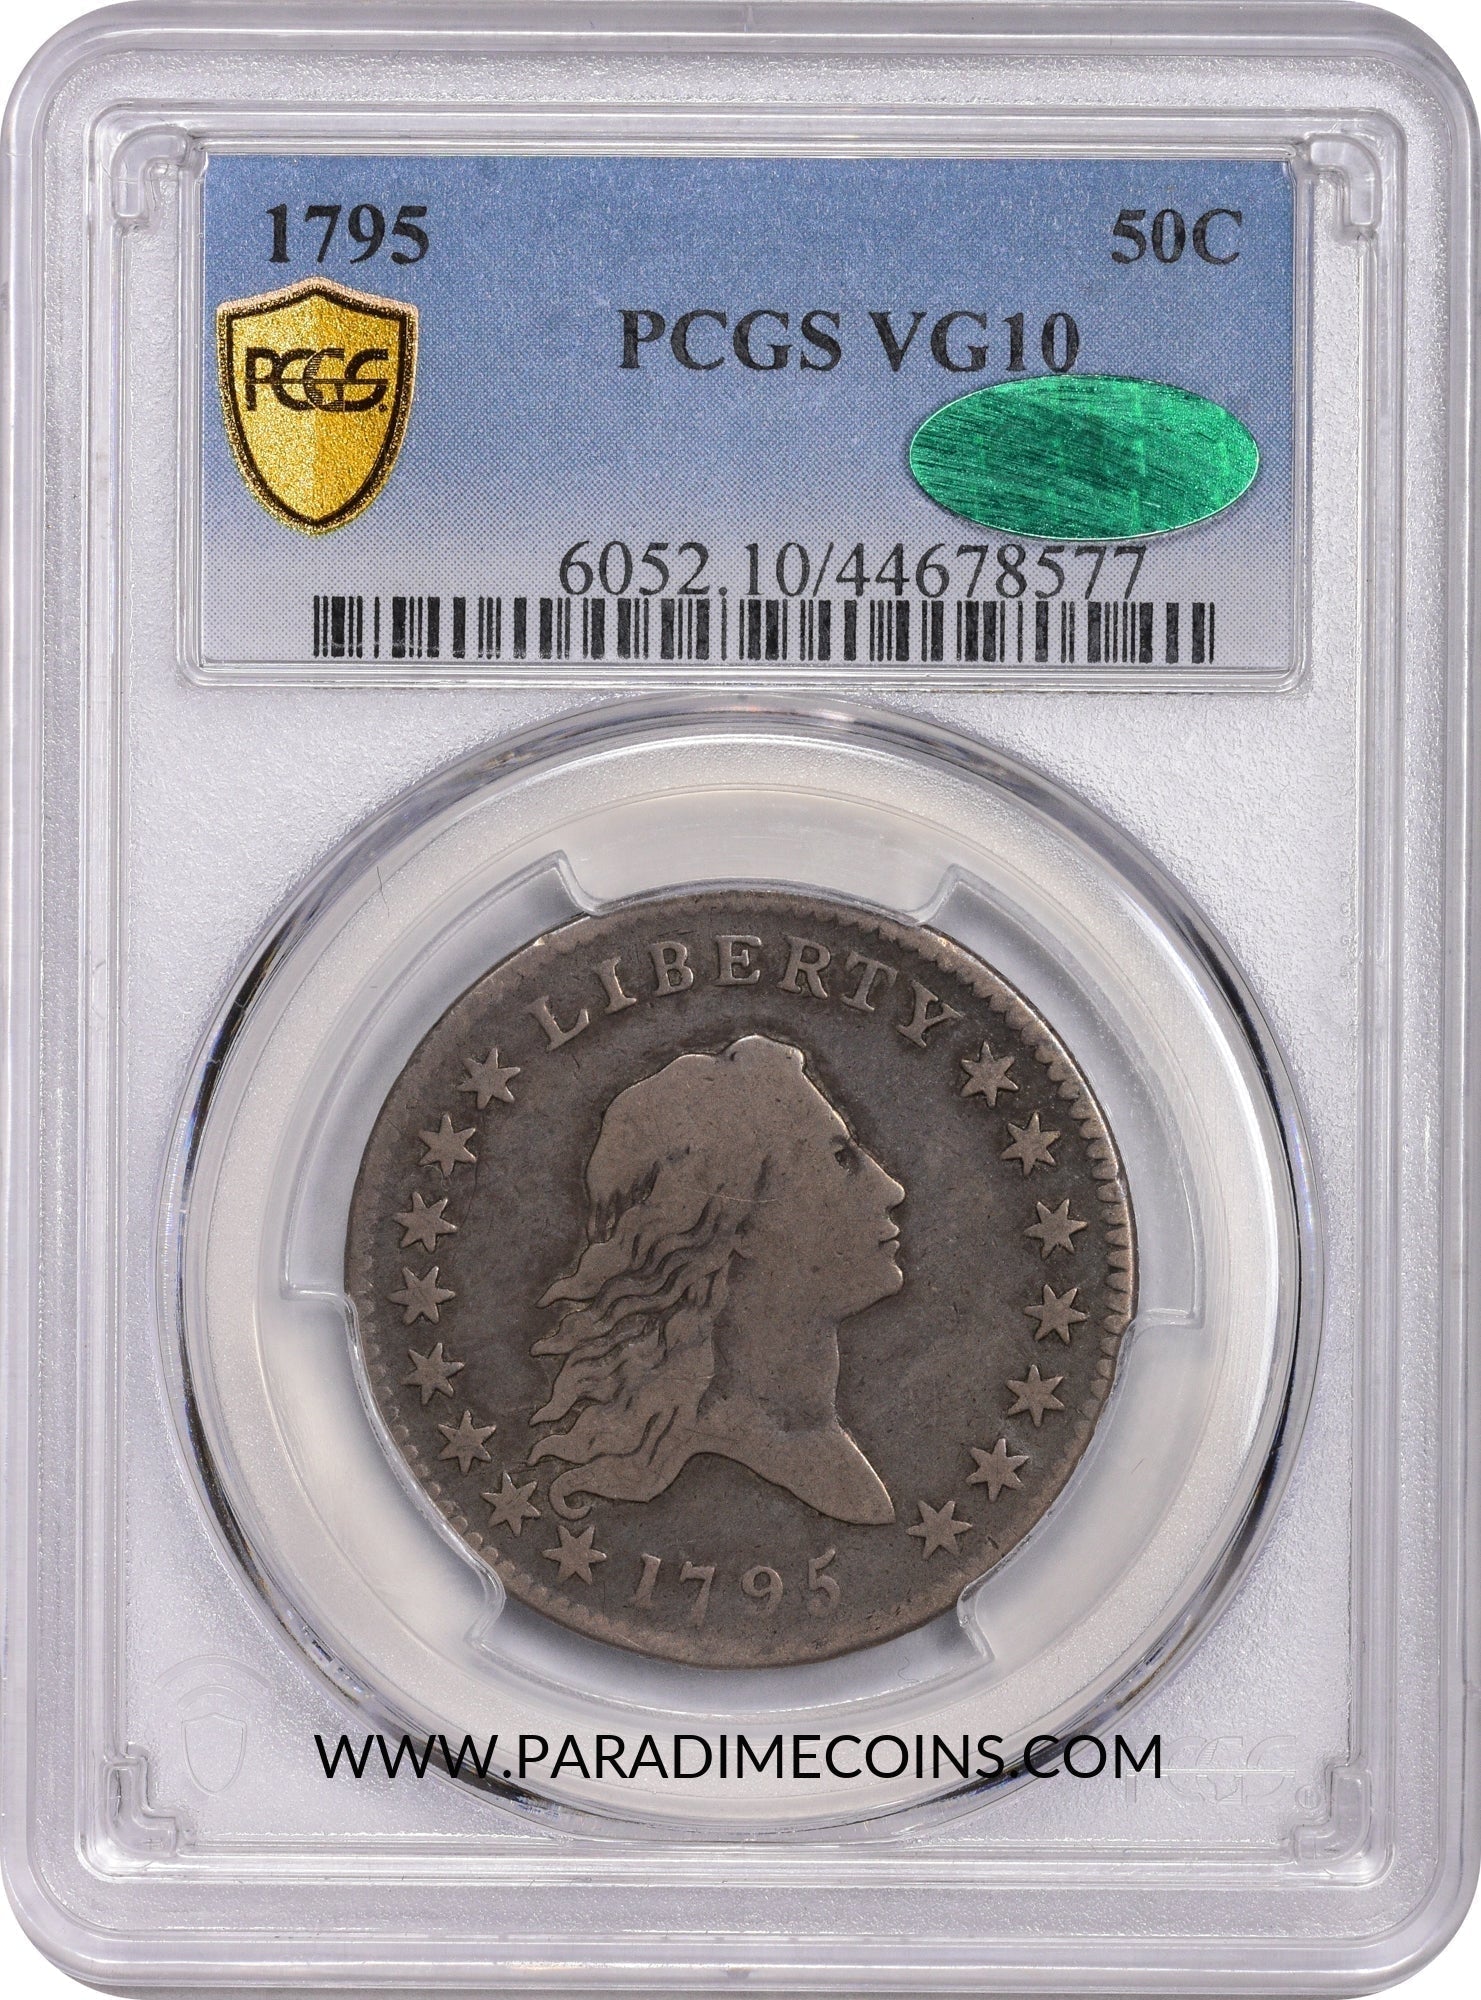 1795 50C VG10 PCGS CAC - Paradime Coins | PCGS NGC CACG CAC Rare US Numismatic Coins For Sale